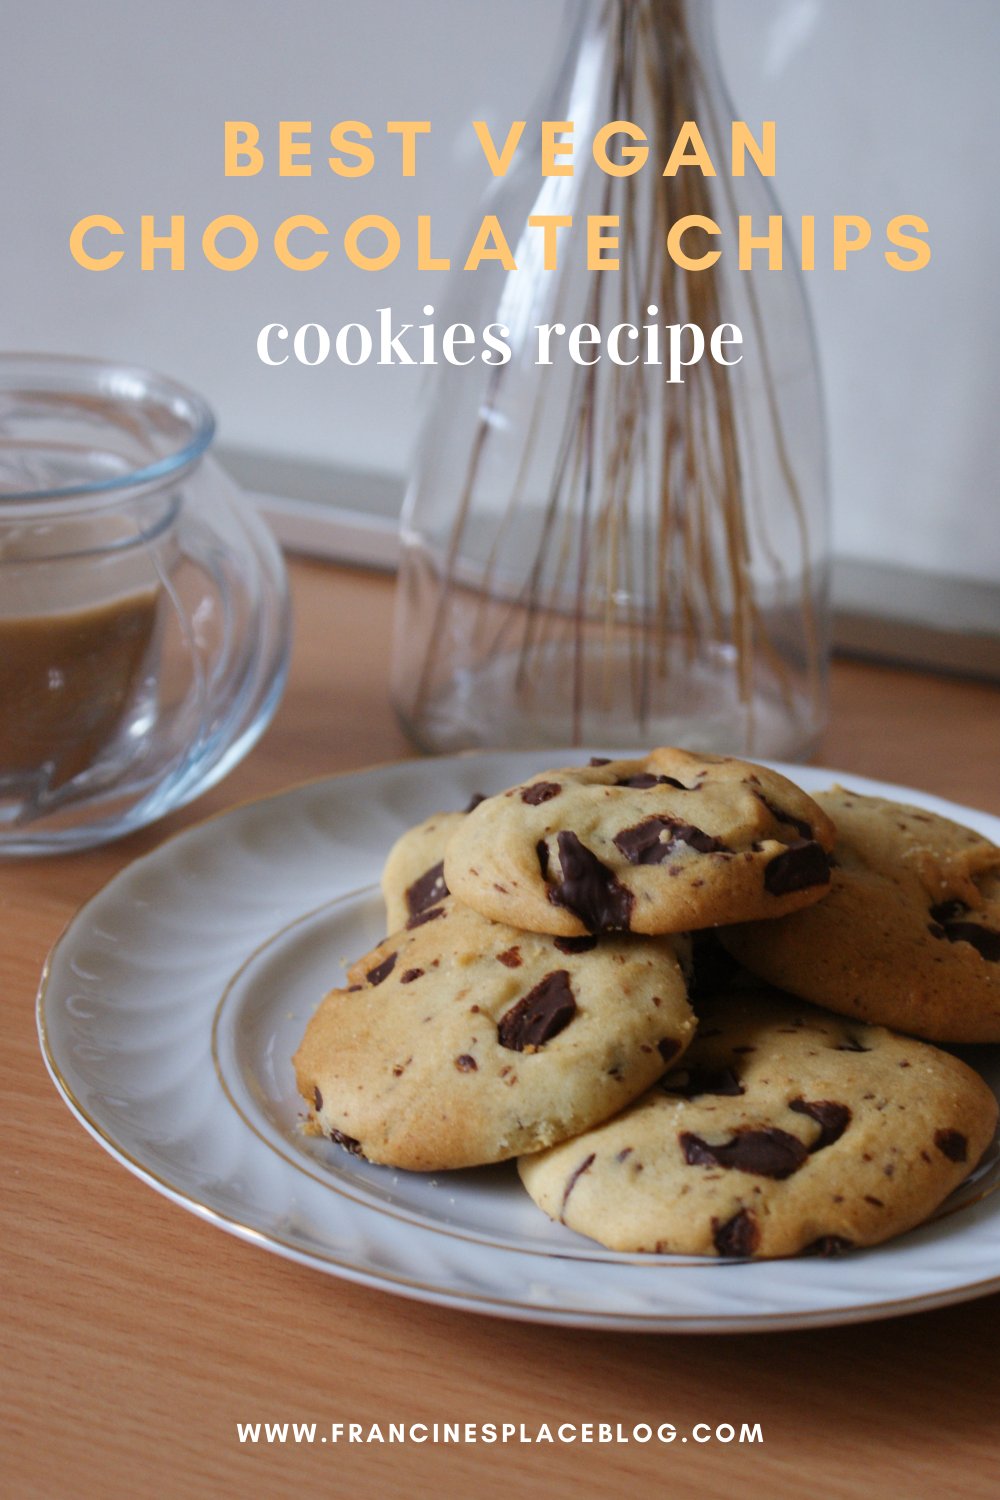 best easy vegan chocolate chips cookies recipe healthy bake quick 20 minute plant based ultimate francinesplaceblog pinterest